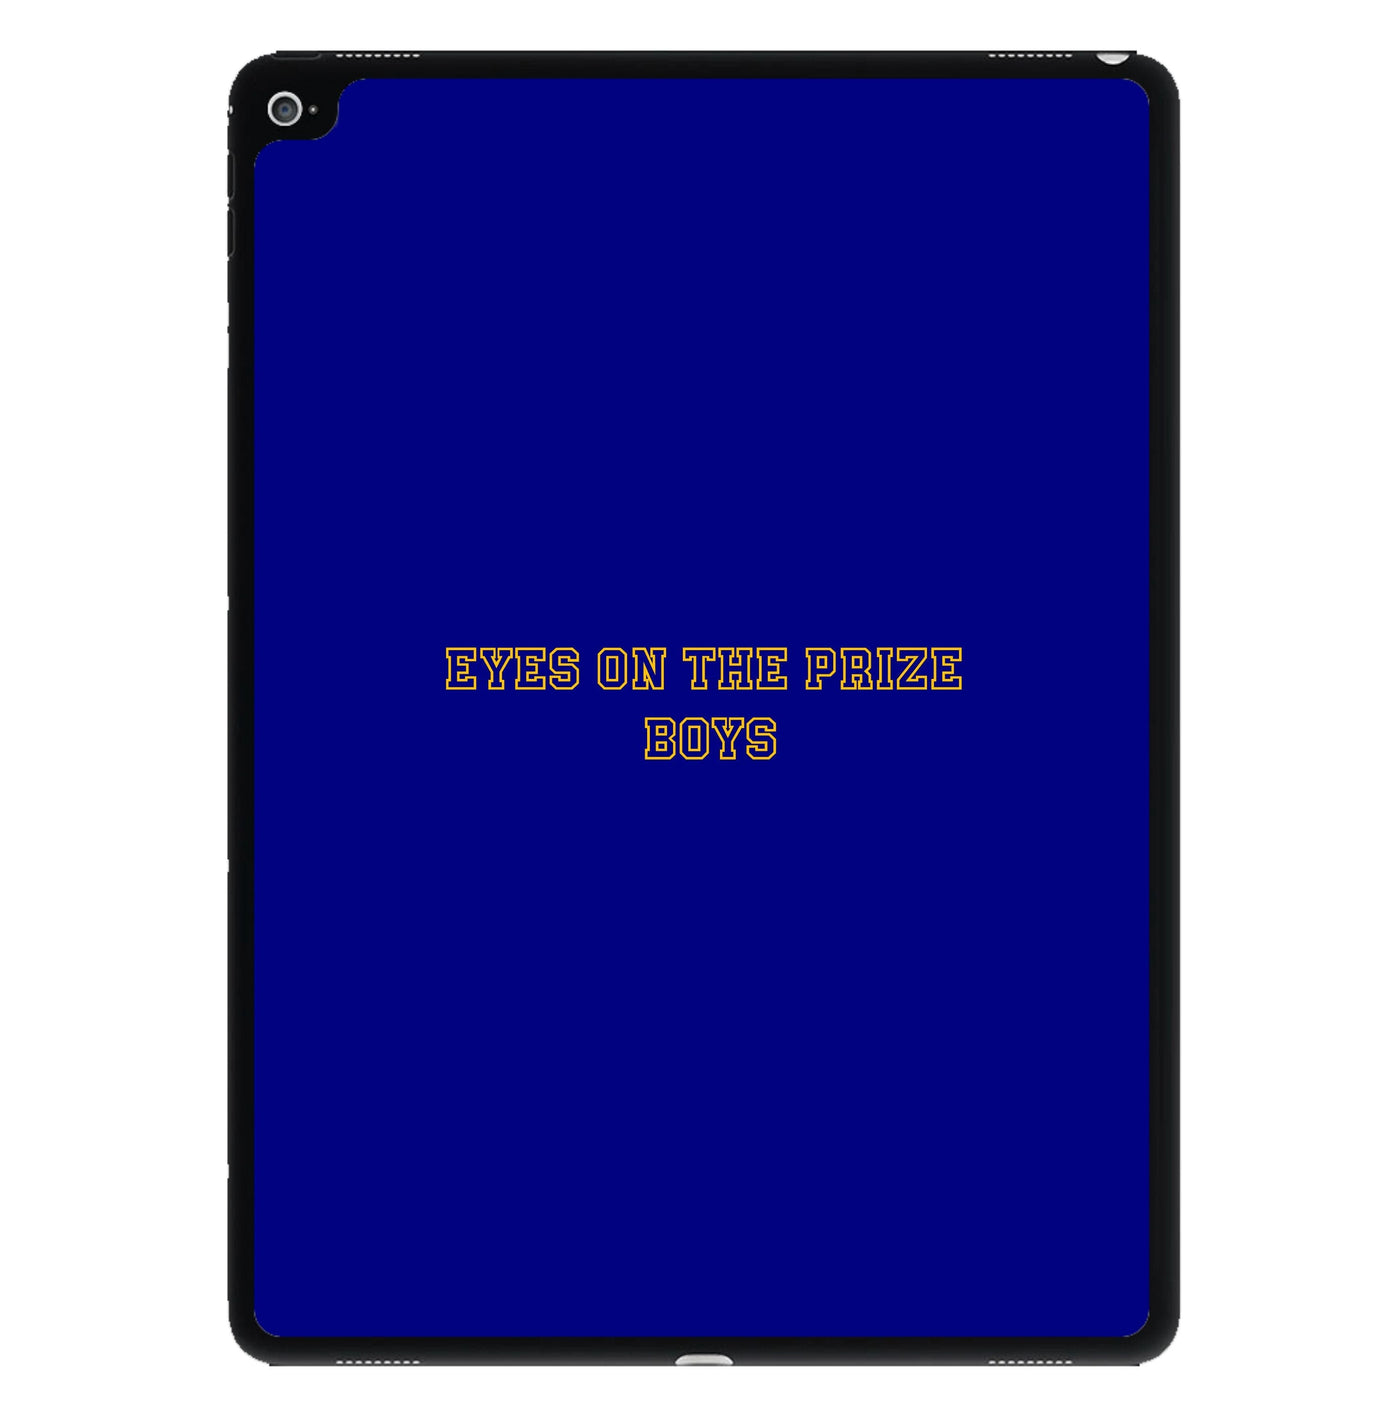 Eyes On The Prize - Islanders iPad Case